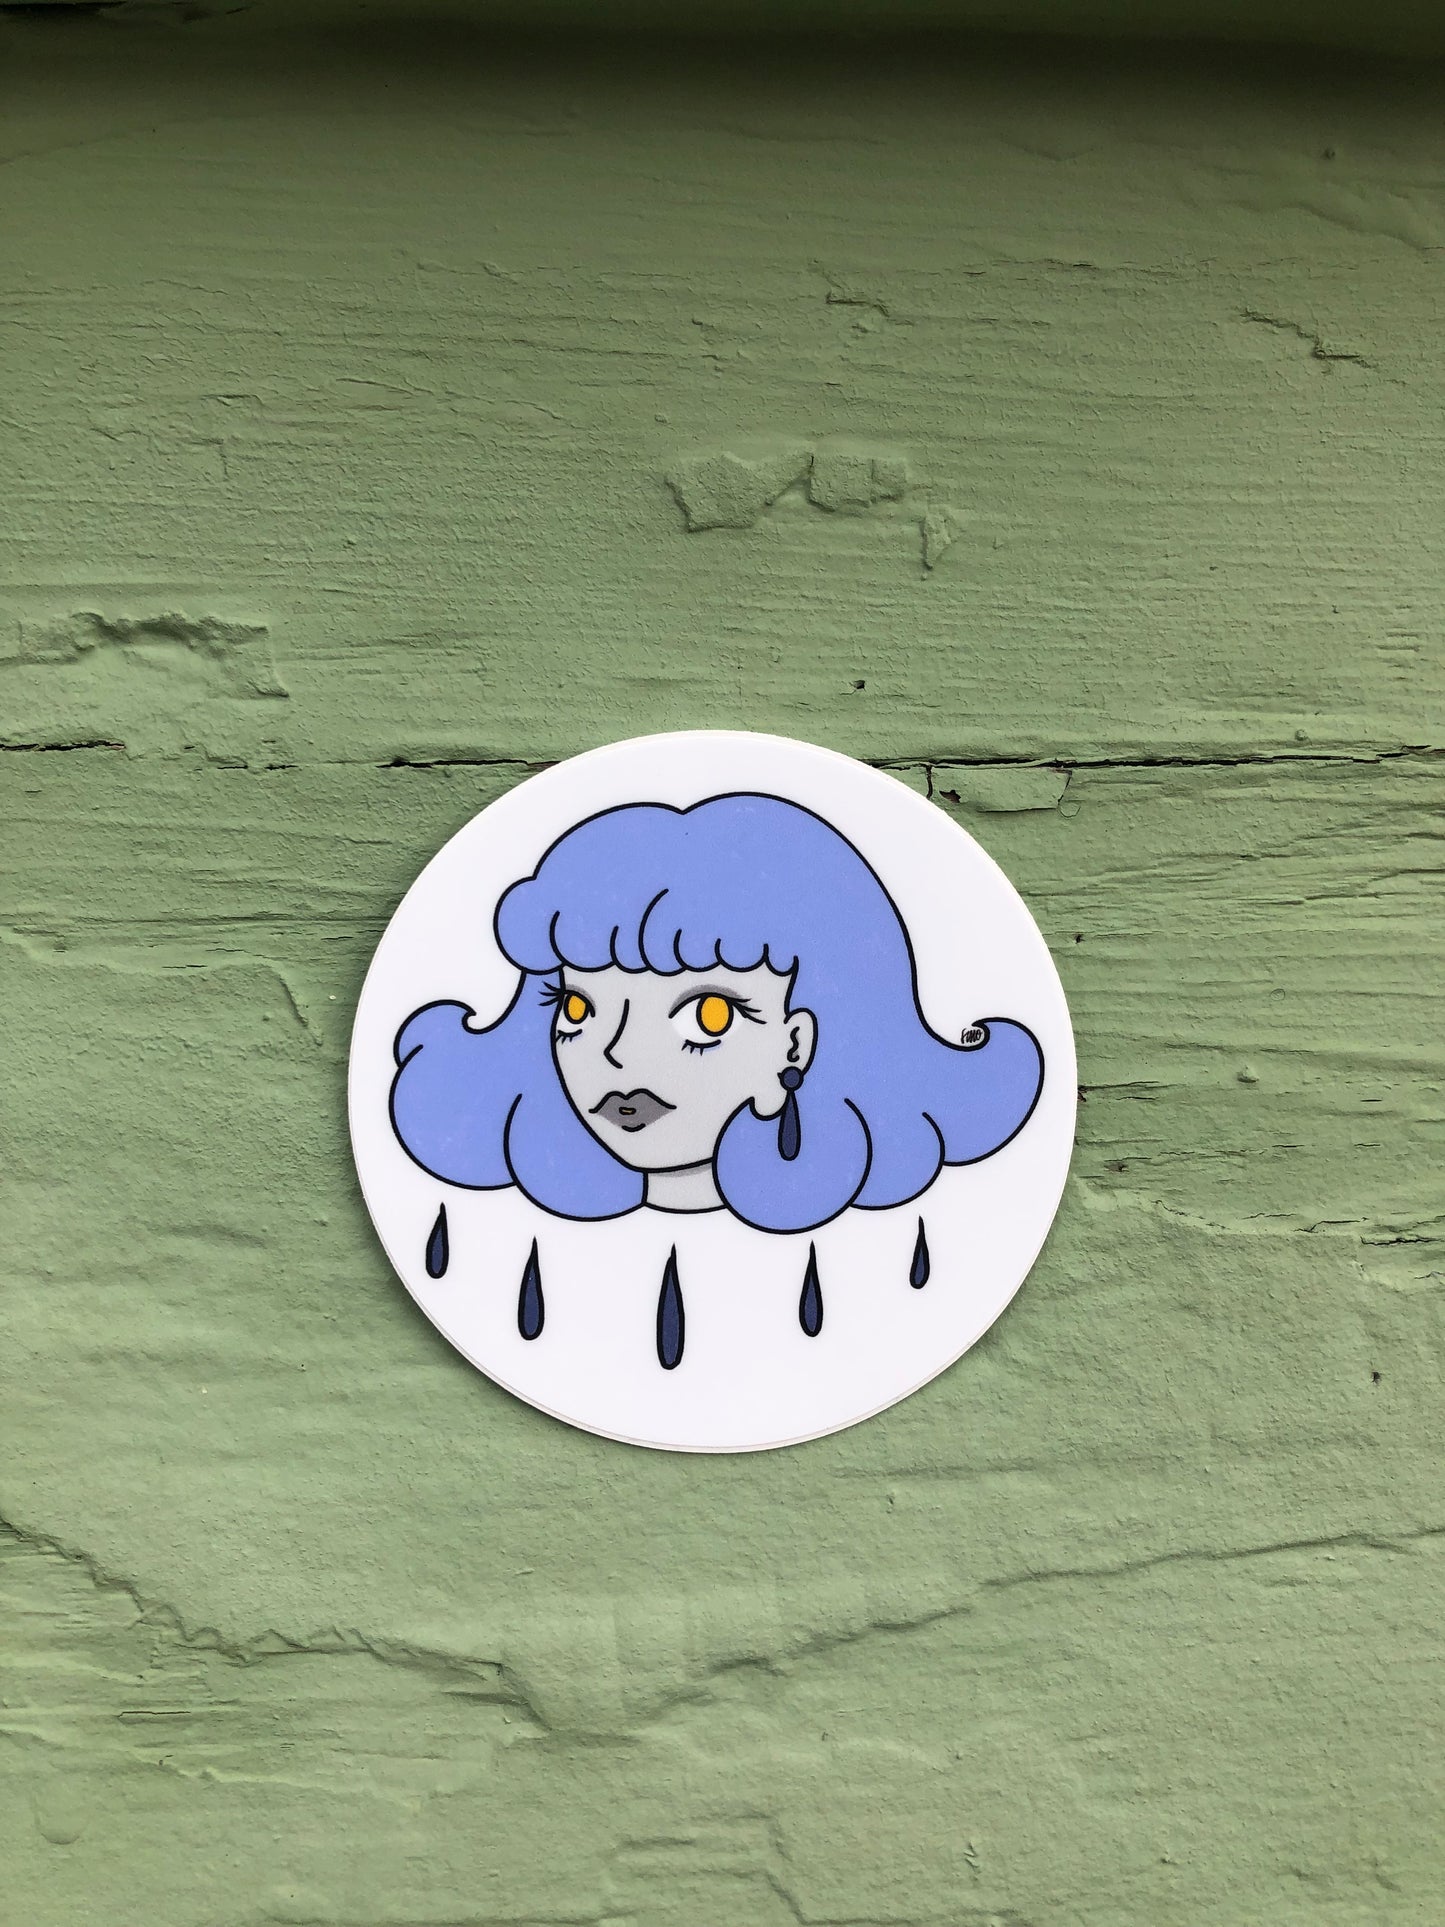 Rainy babe sticker